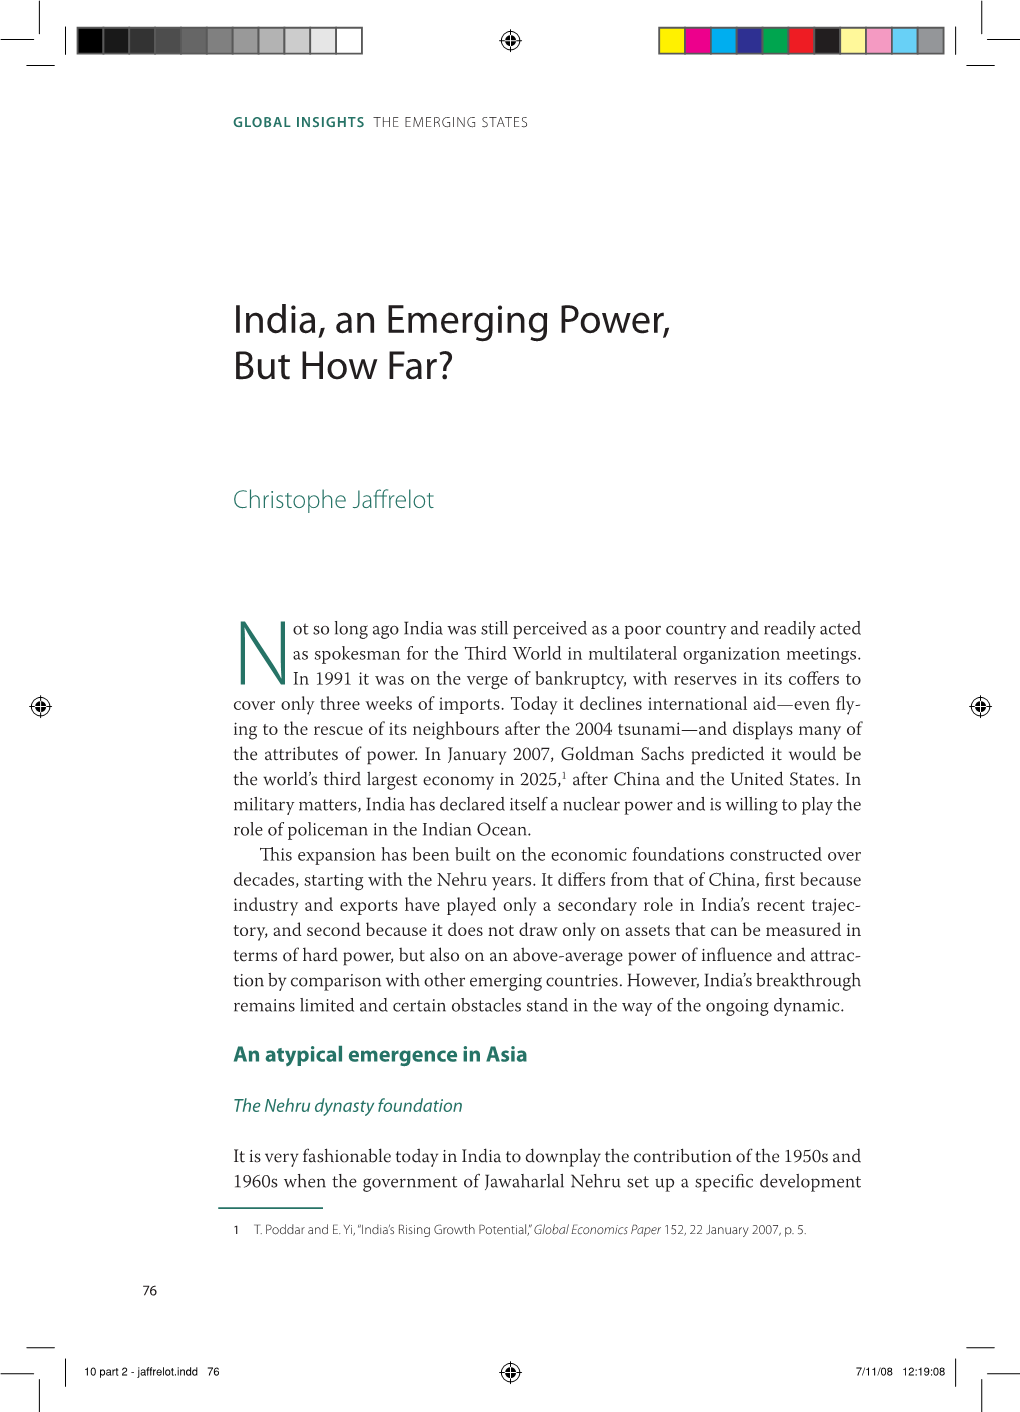 India, an Emerging Power, but How Far?